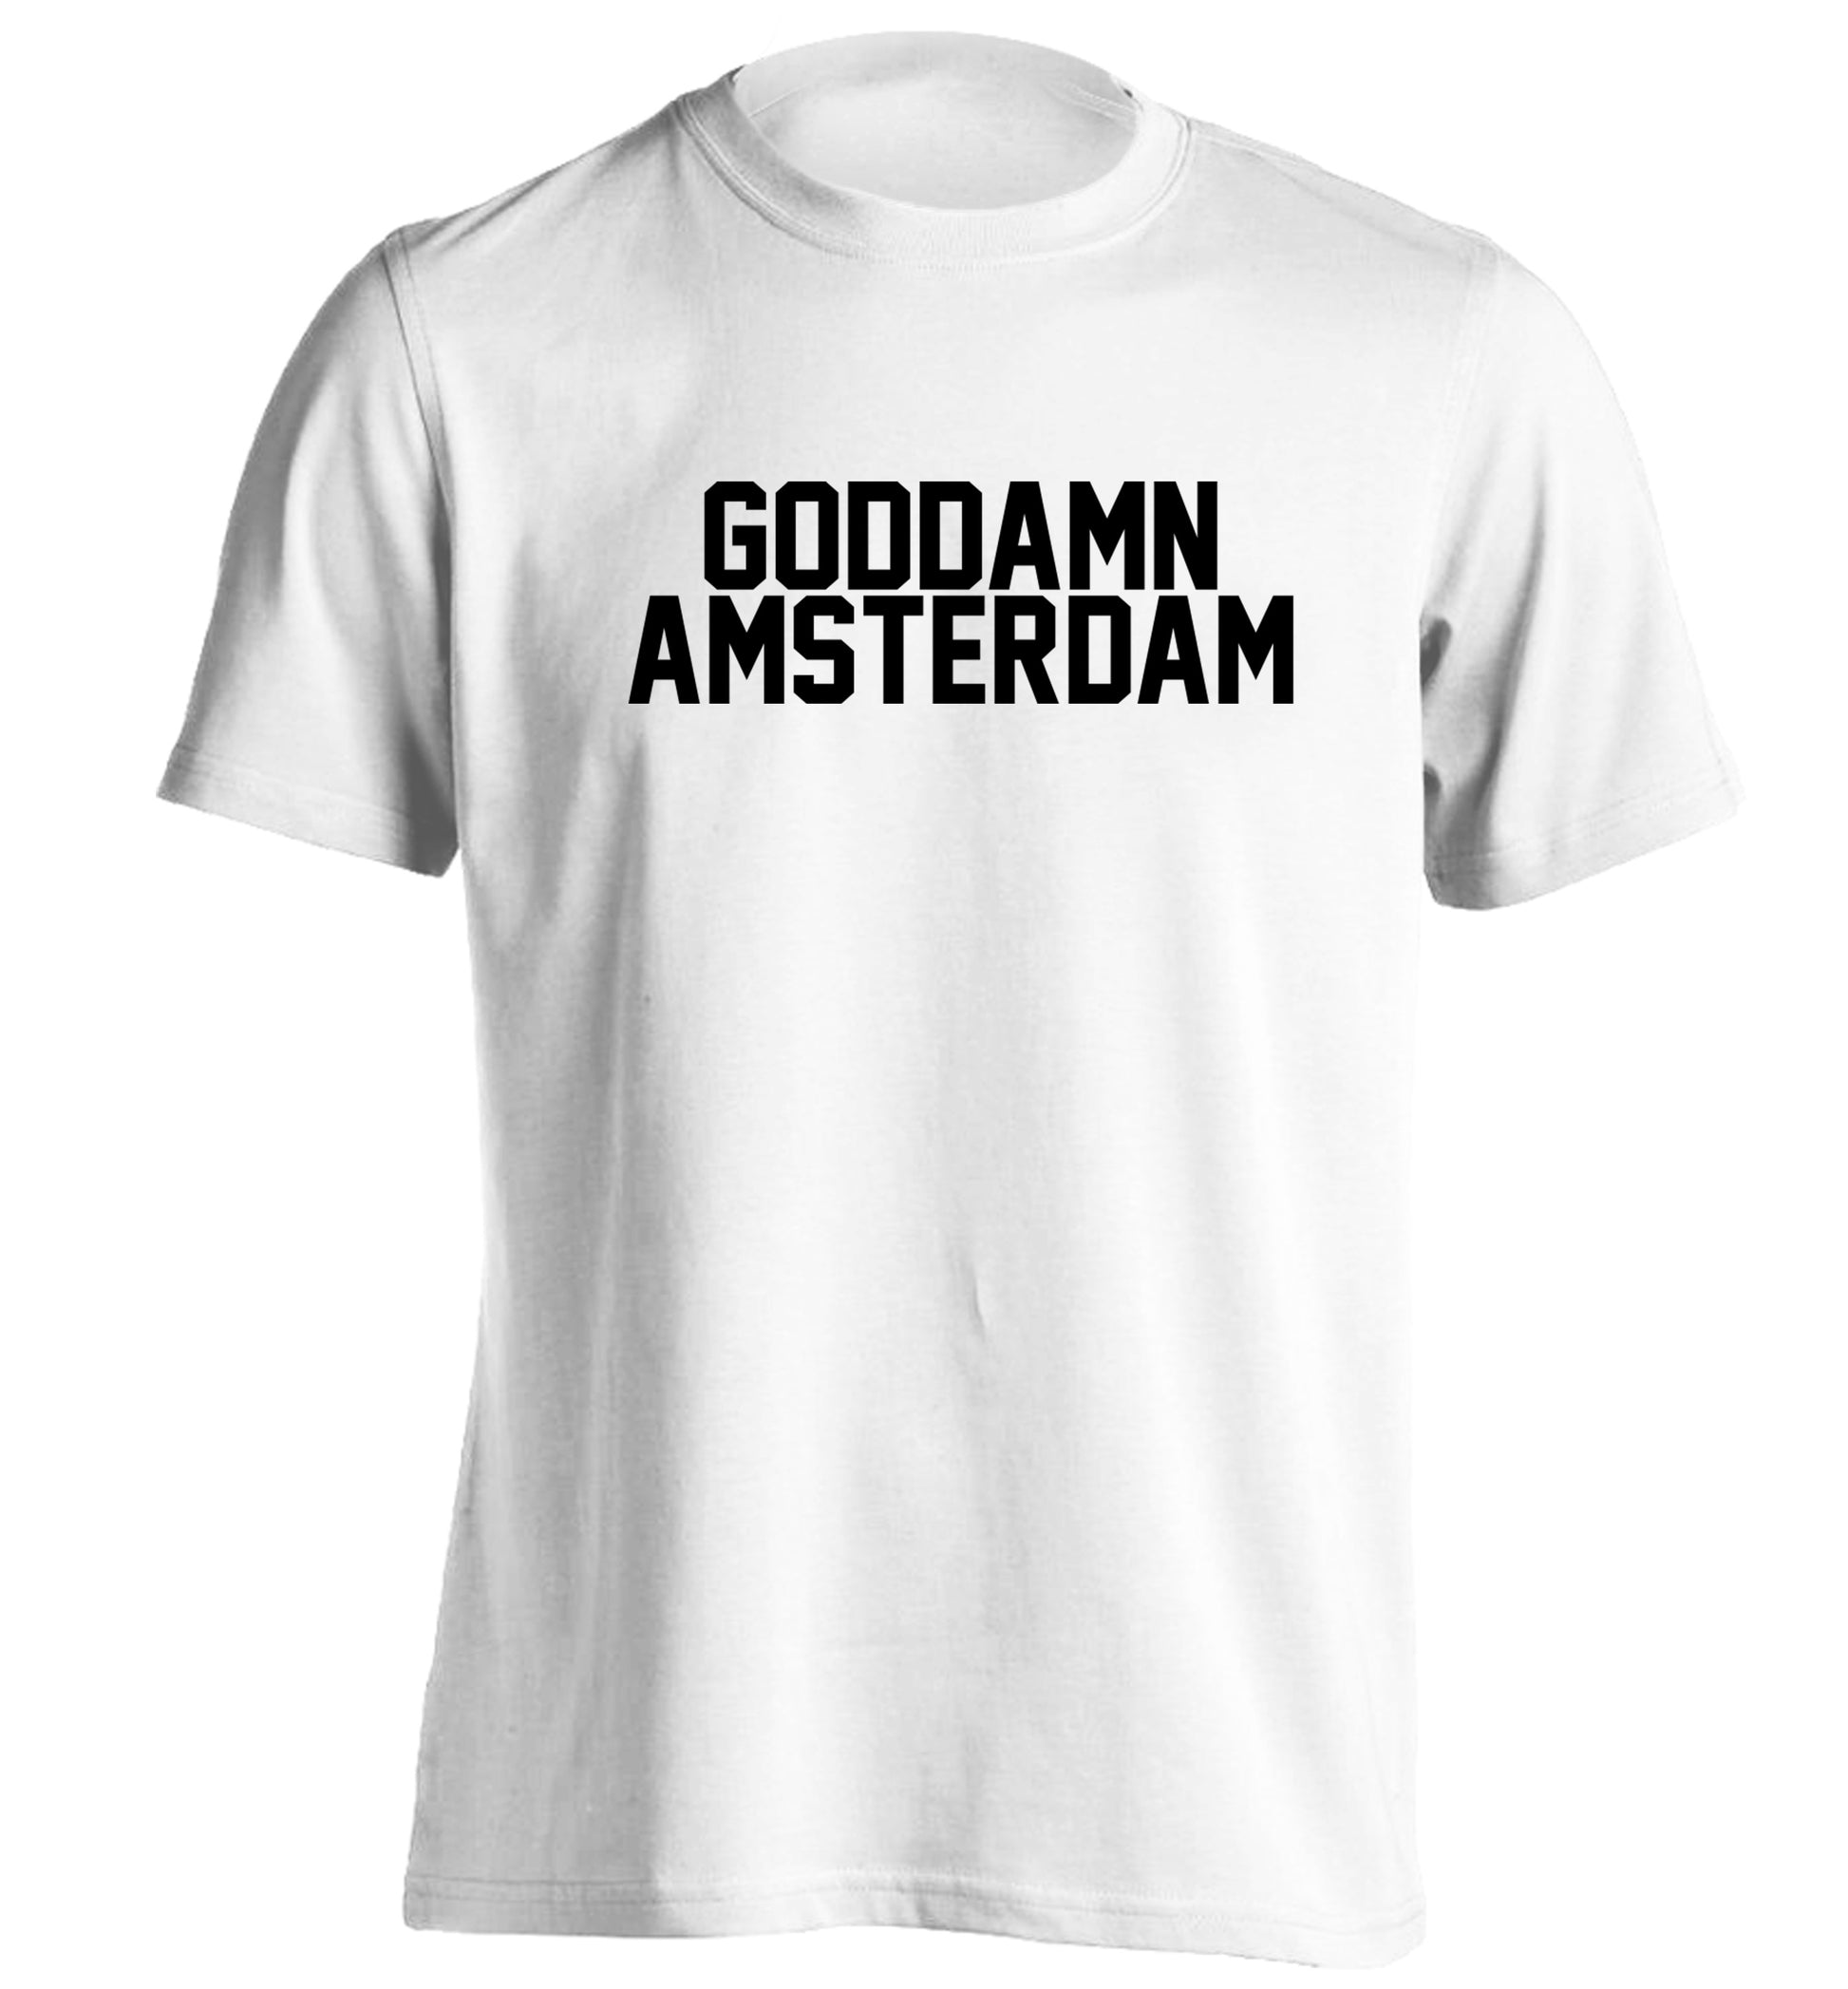 Goddamn Amsterdam adults unisex white Tshirt 2XL